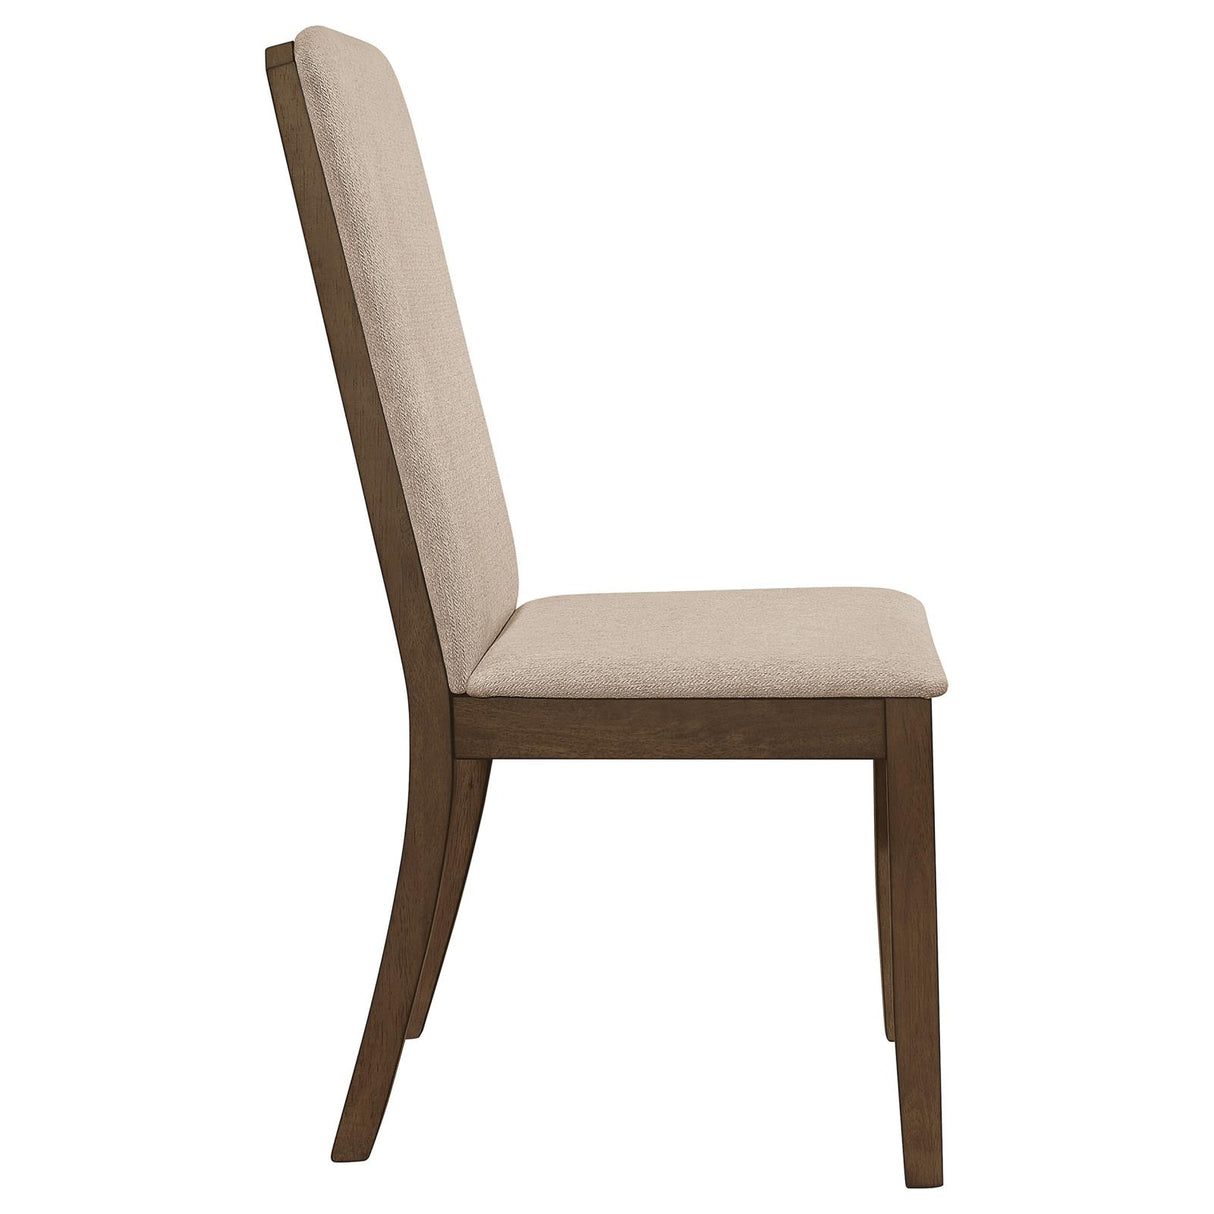 Wethersfield Solid Back Side Chairs Latte (Set of 2) - 109842 - Luna Furniture